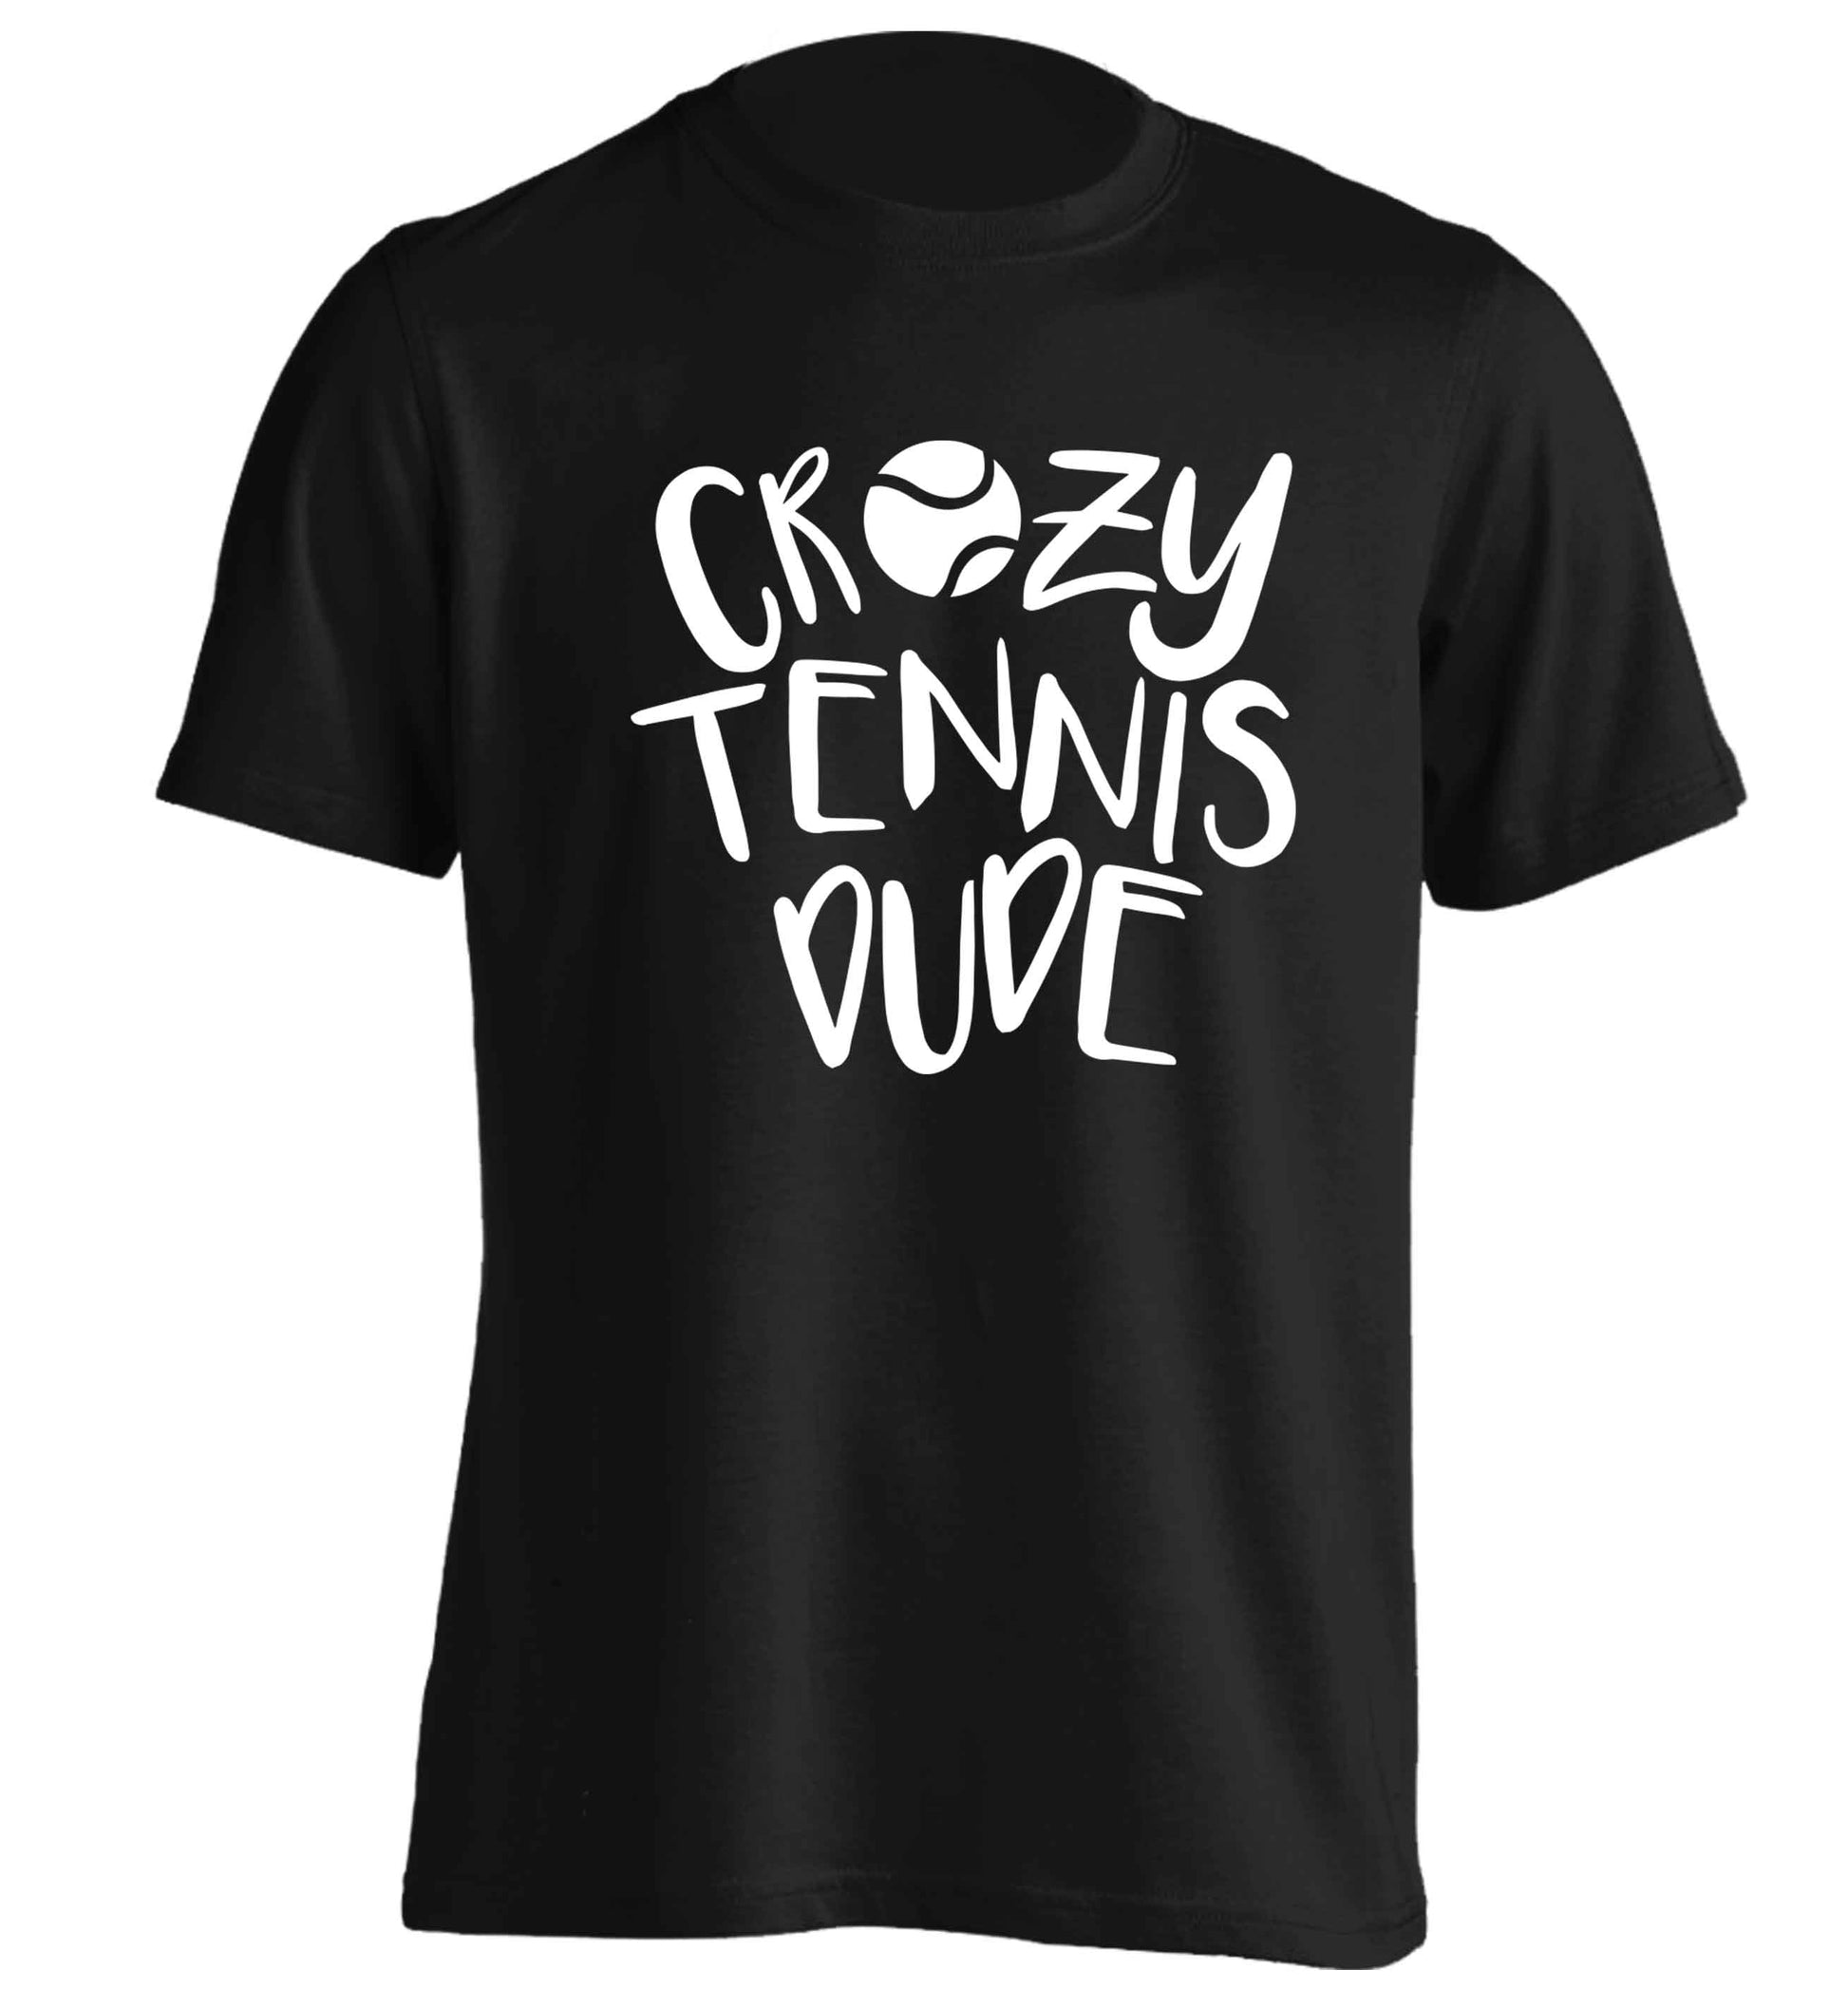 Crazy tennis dude adults unisex black Tshirt 2XL